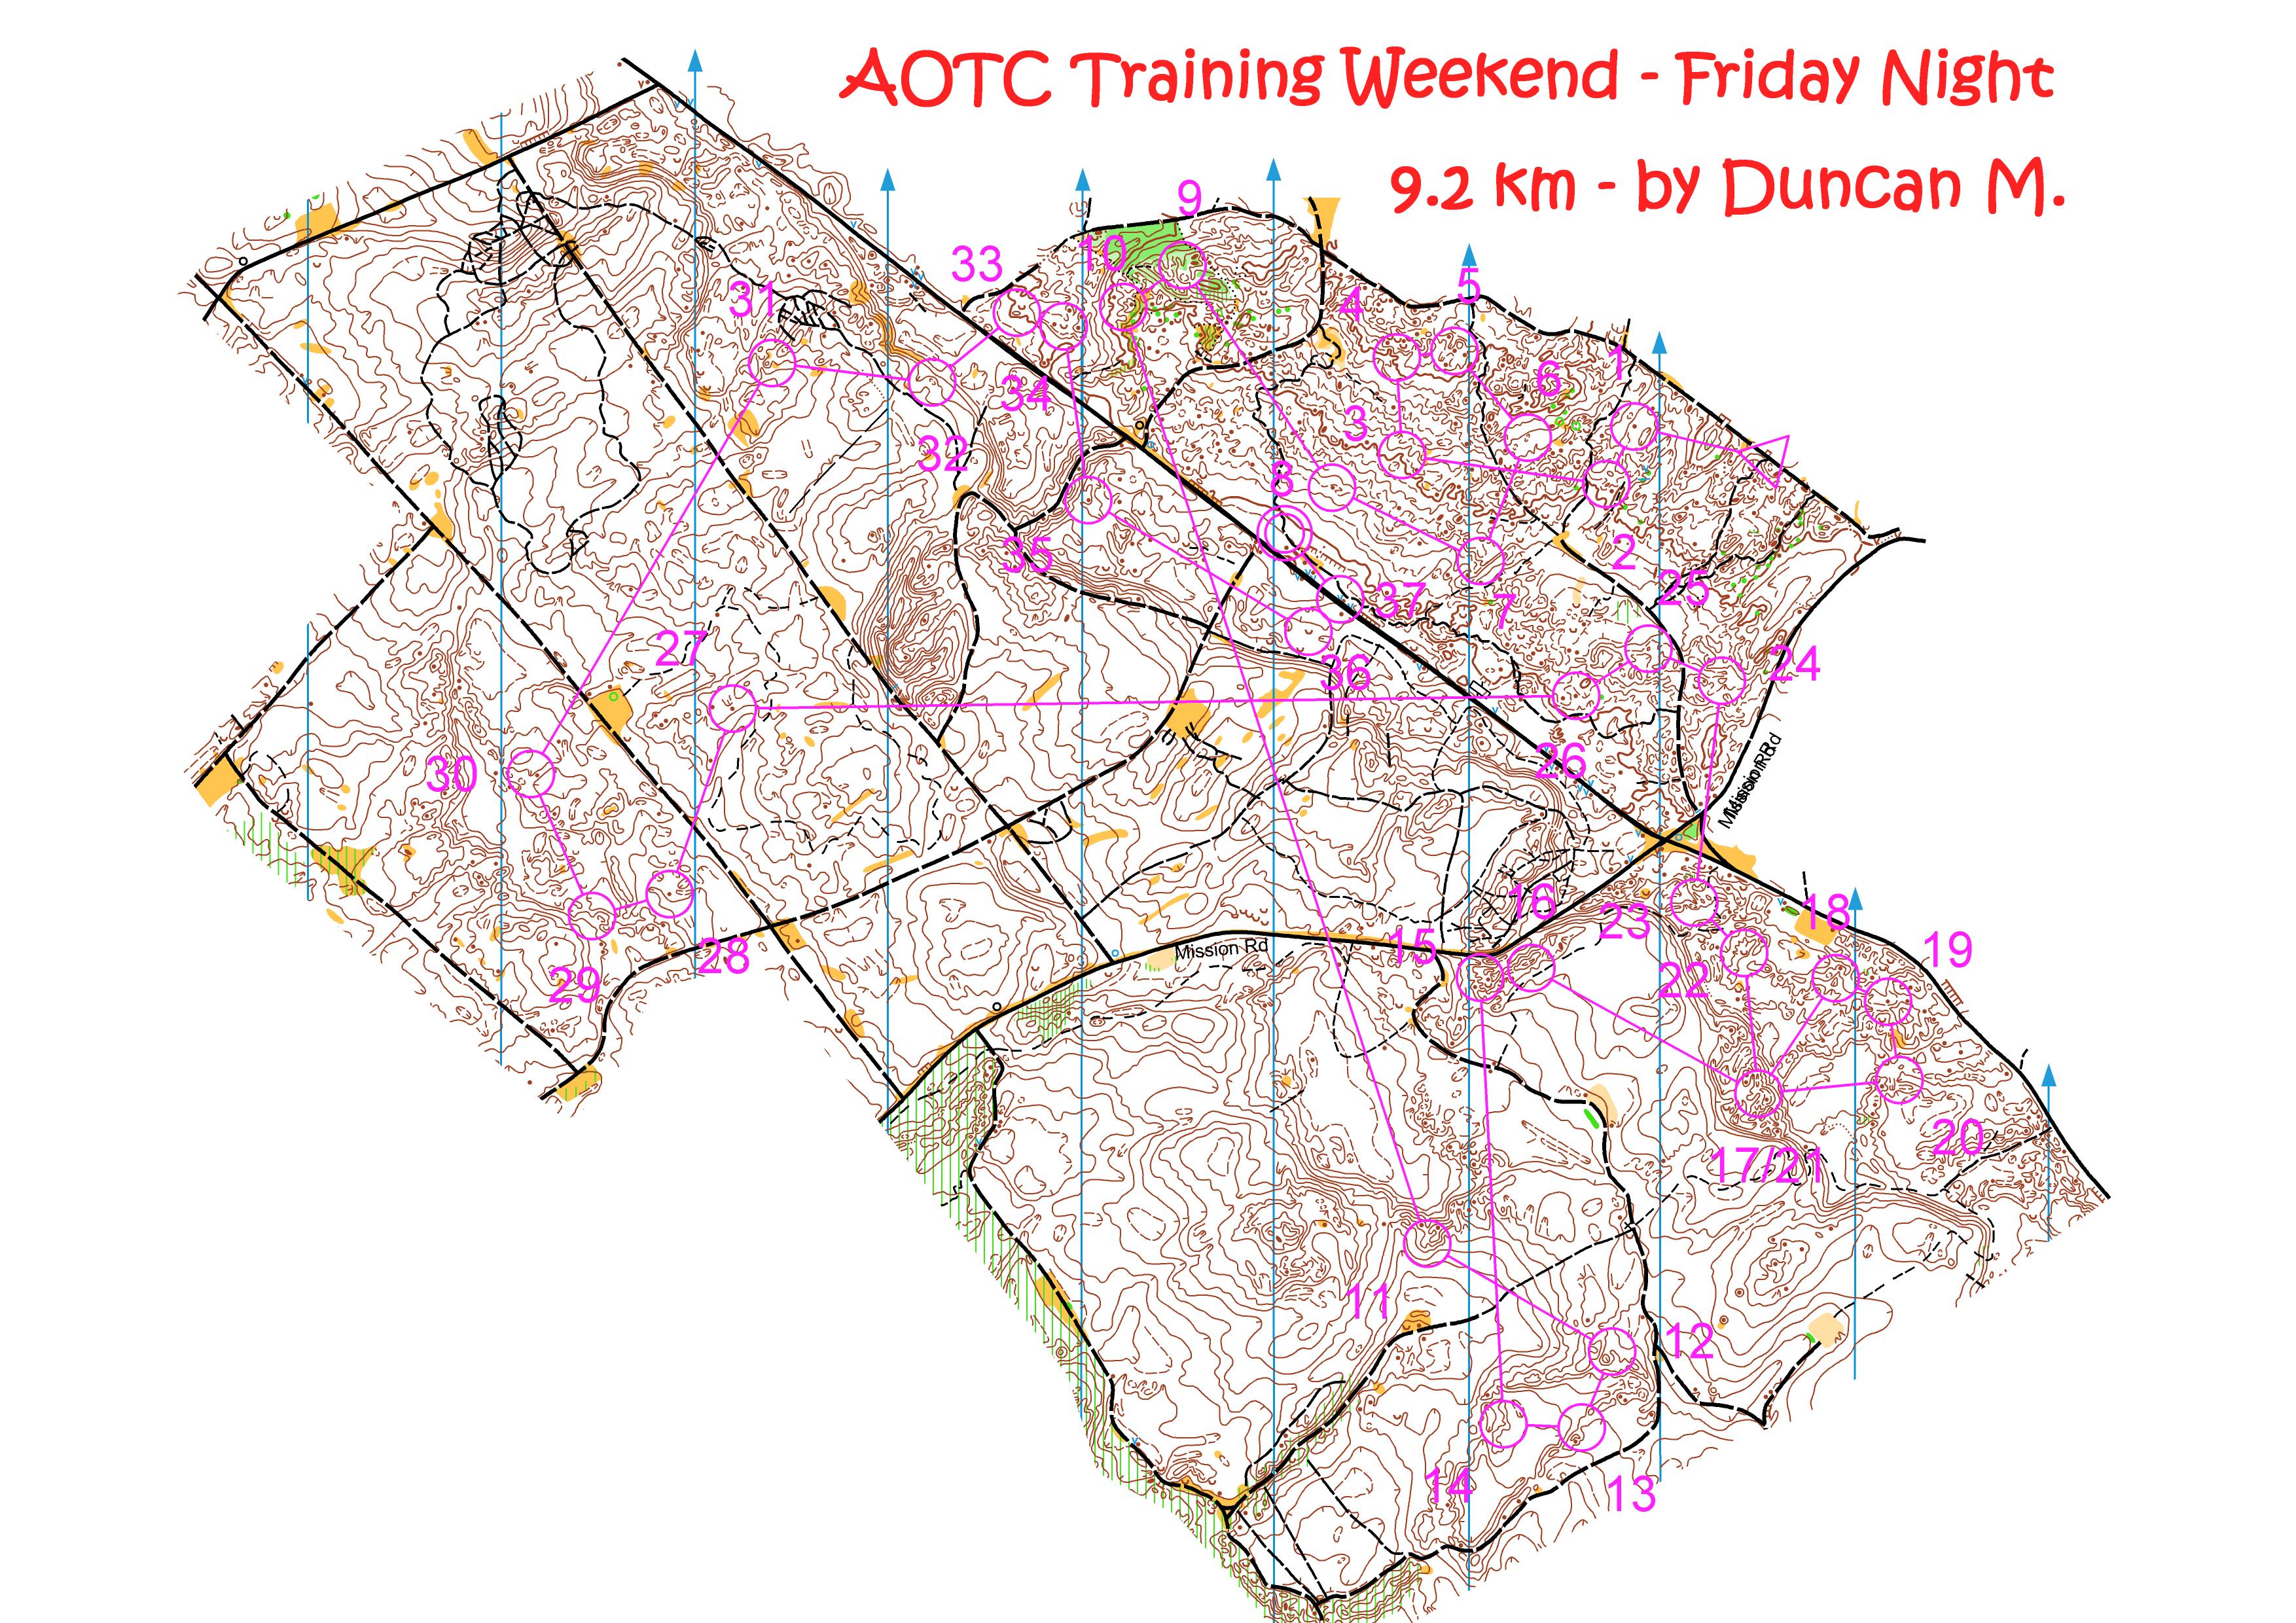 AOTC Training Weekend - Friday Night (16-11-2012)